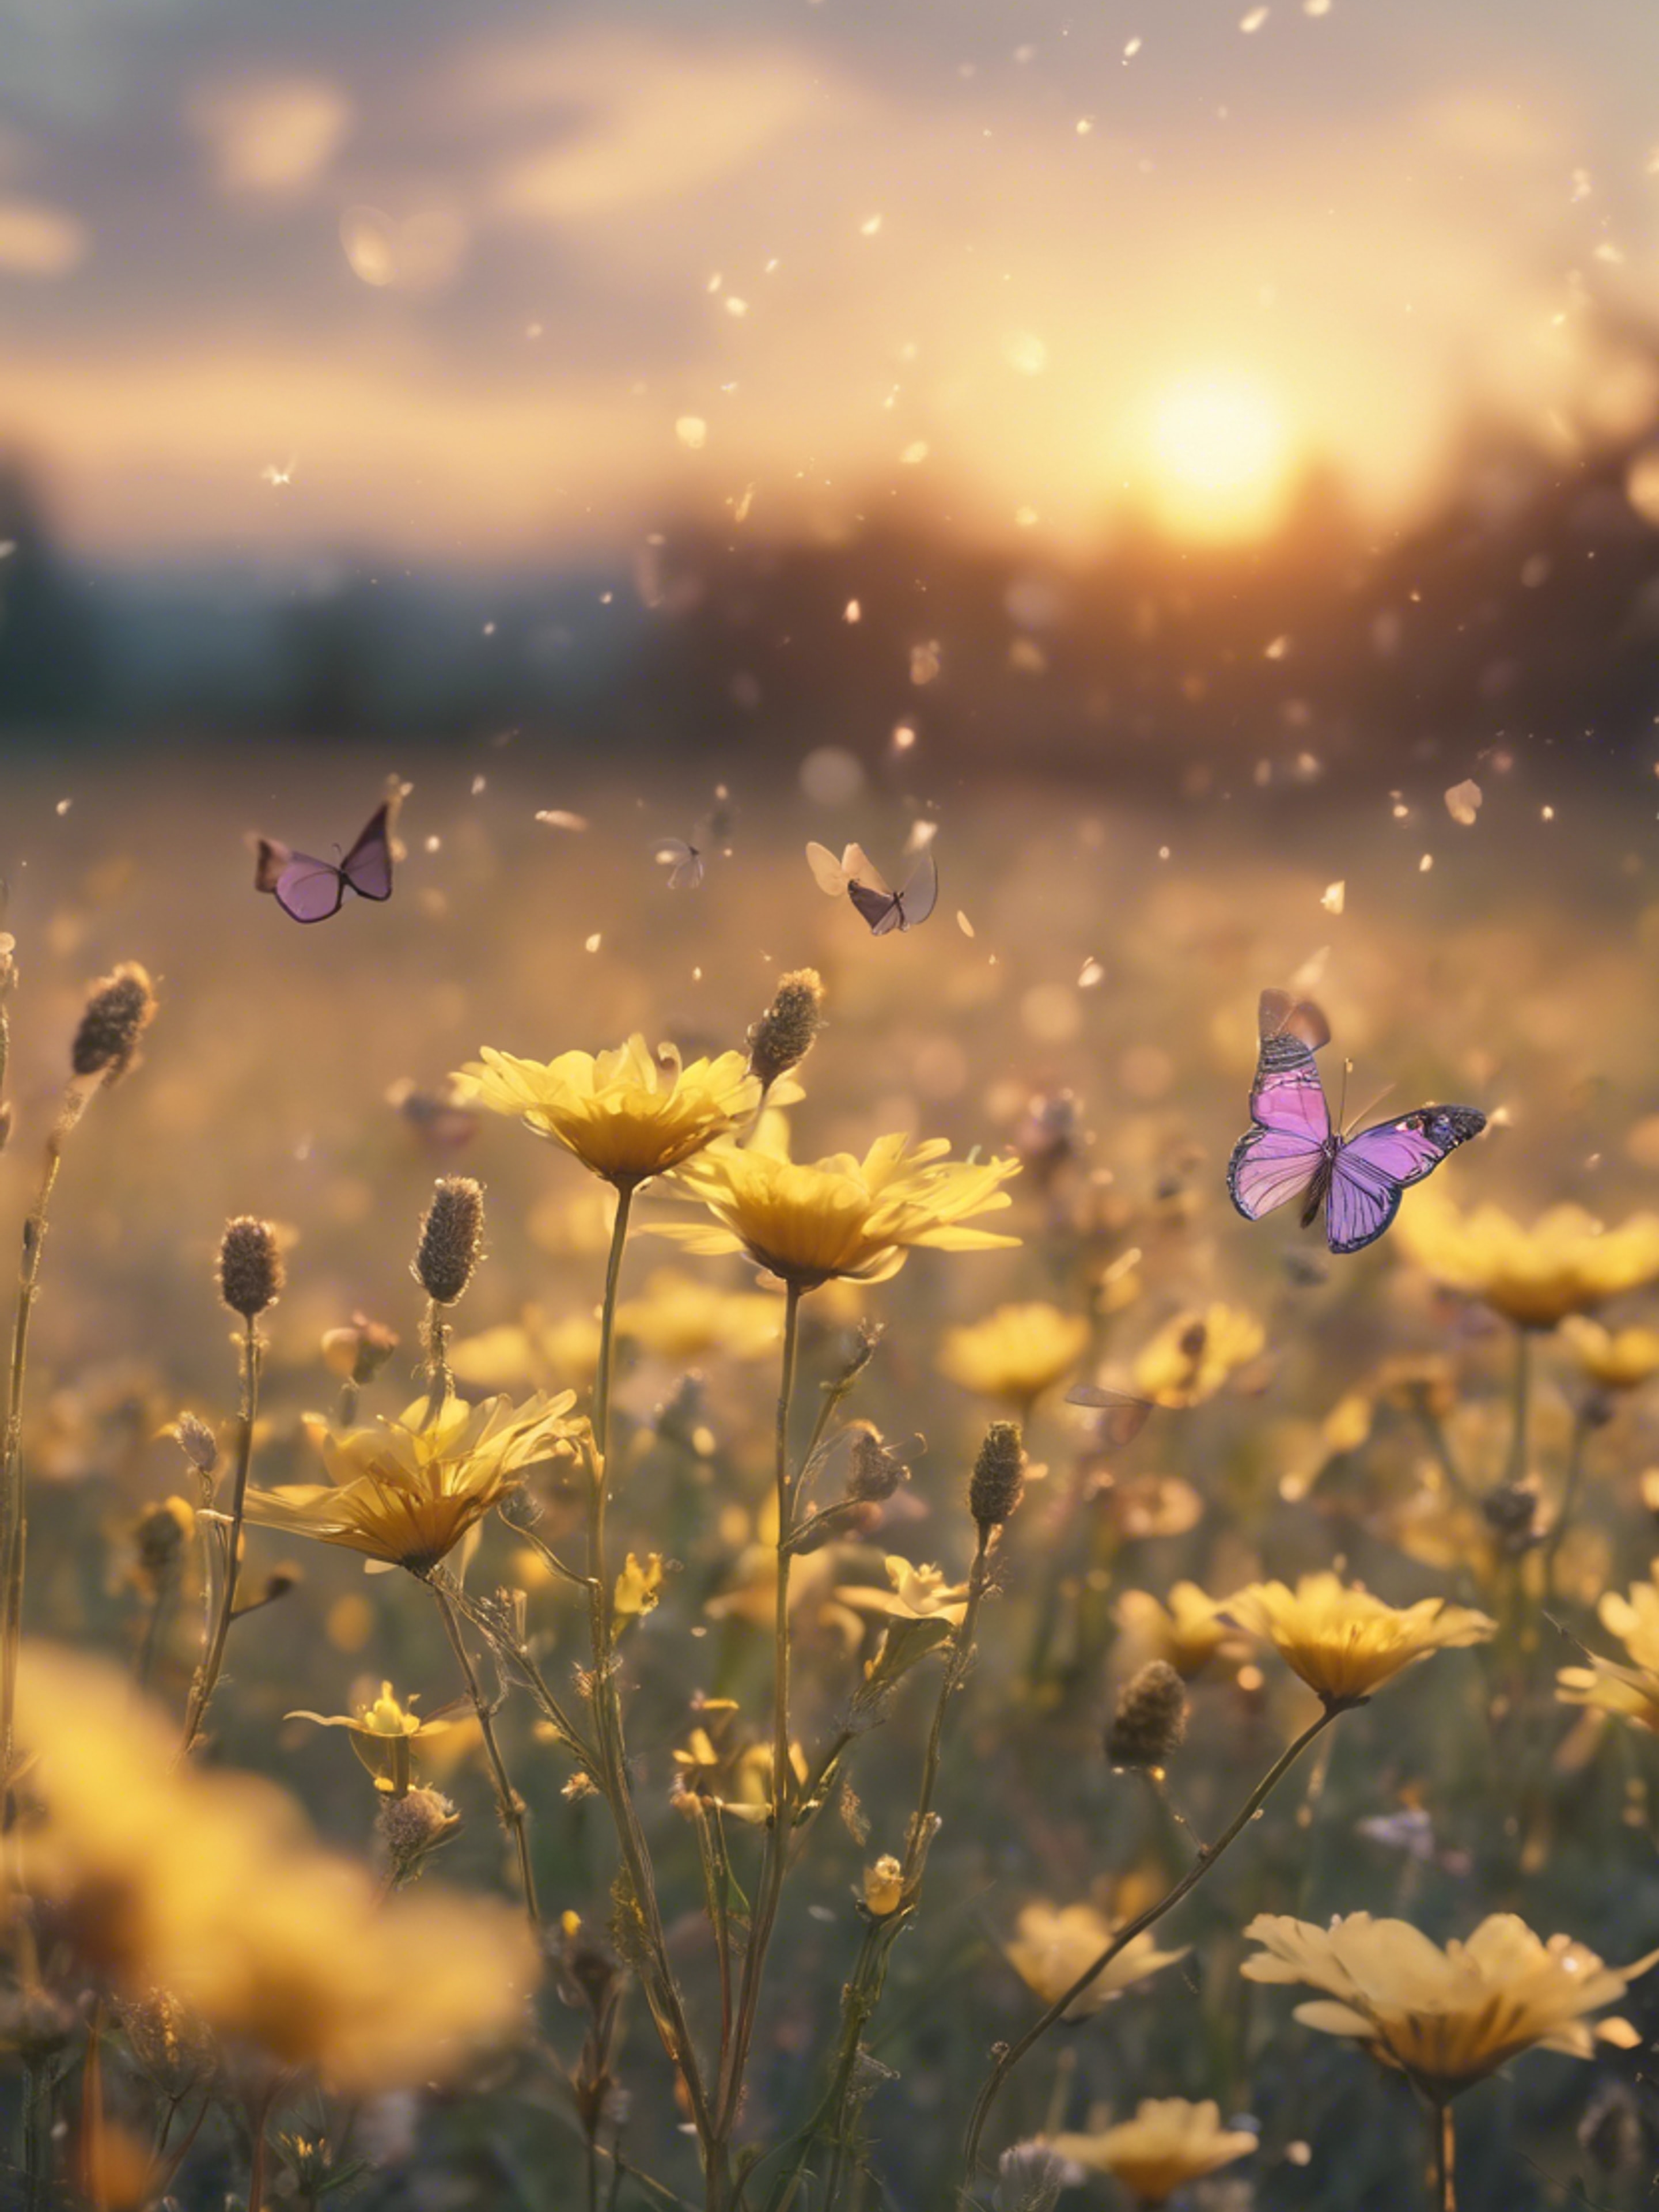 Sunset scene overlooking a meadow filled with pastel yellow flowers and kawaii butterflies fluttering above them.壁紙[4de922e1f50d428d8d1a]